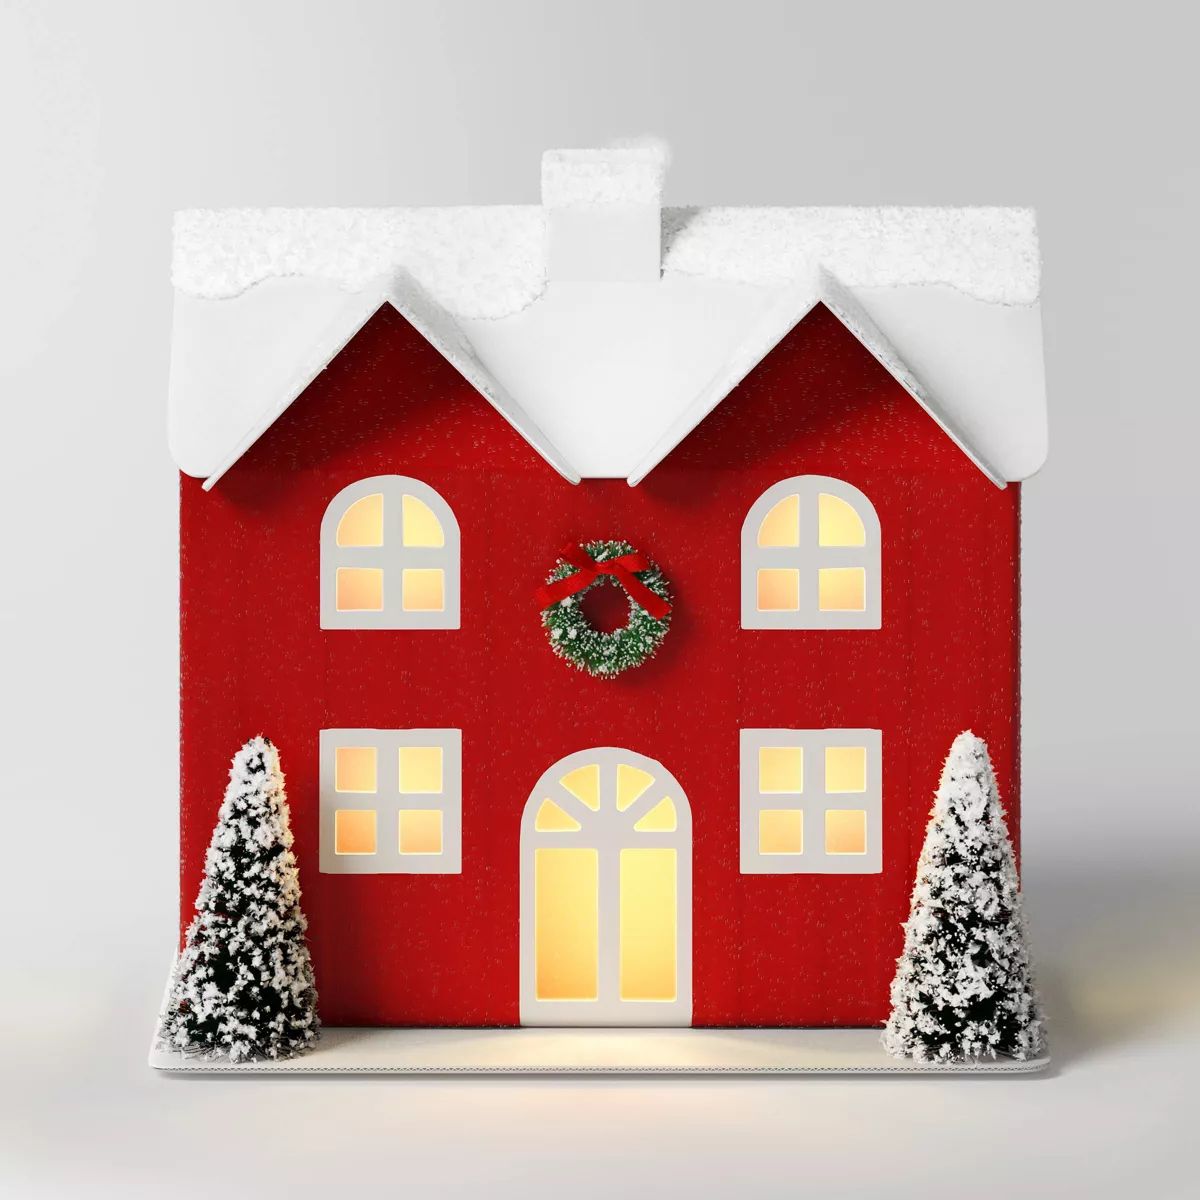 6.75" Battery Operated Lit Paper House Christmas Village Building - Wondershop™ Red | Target